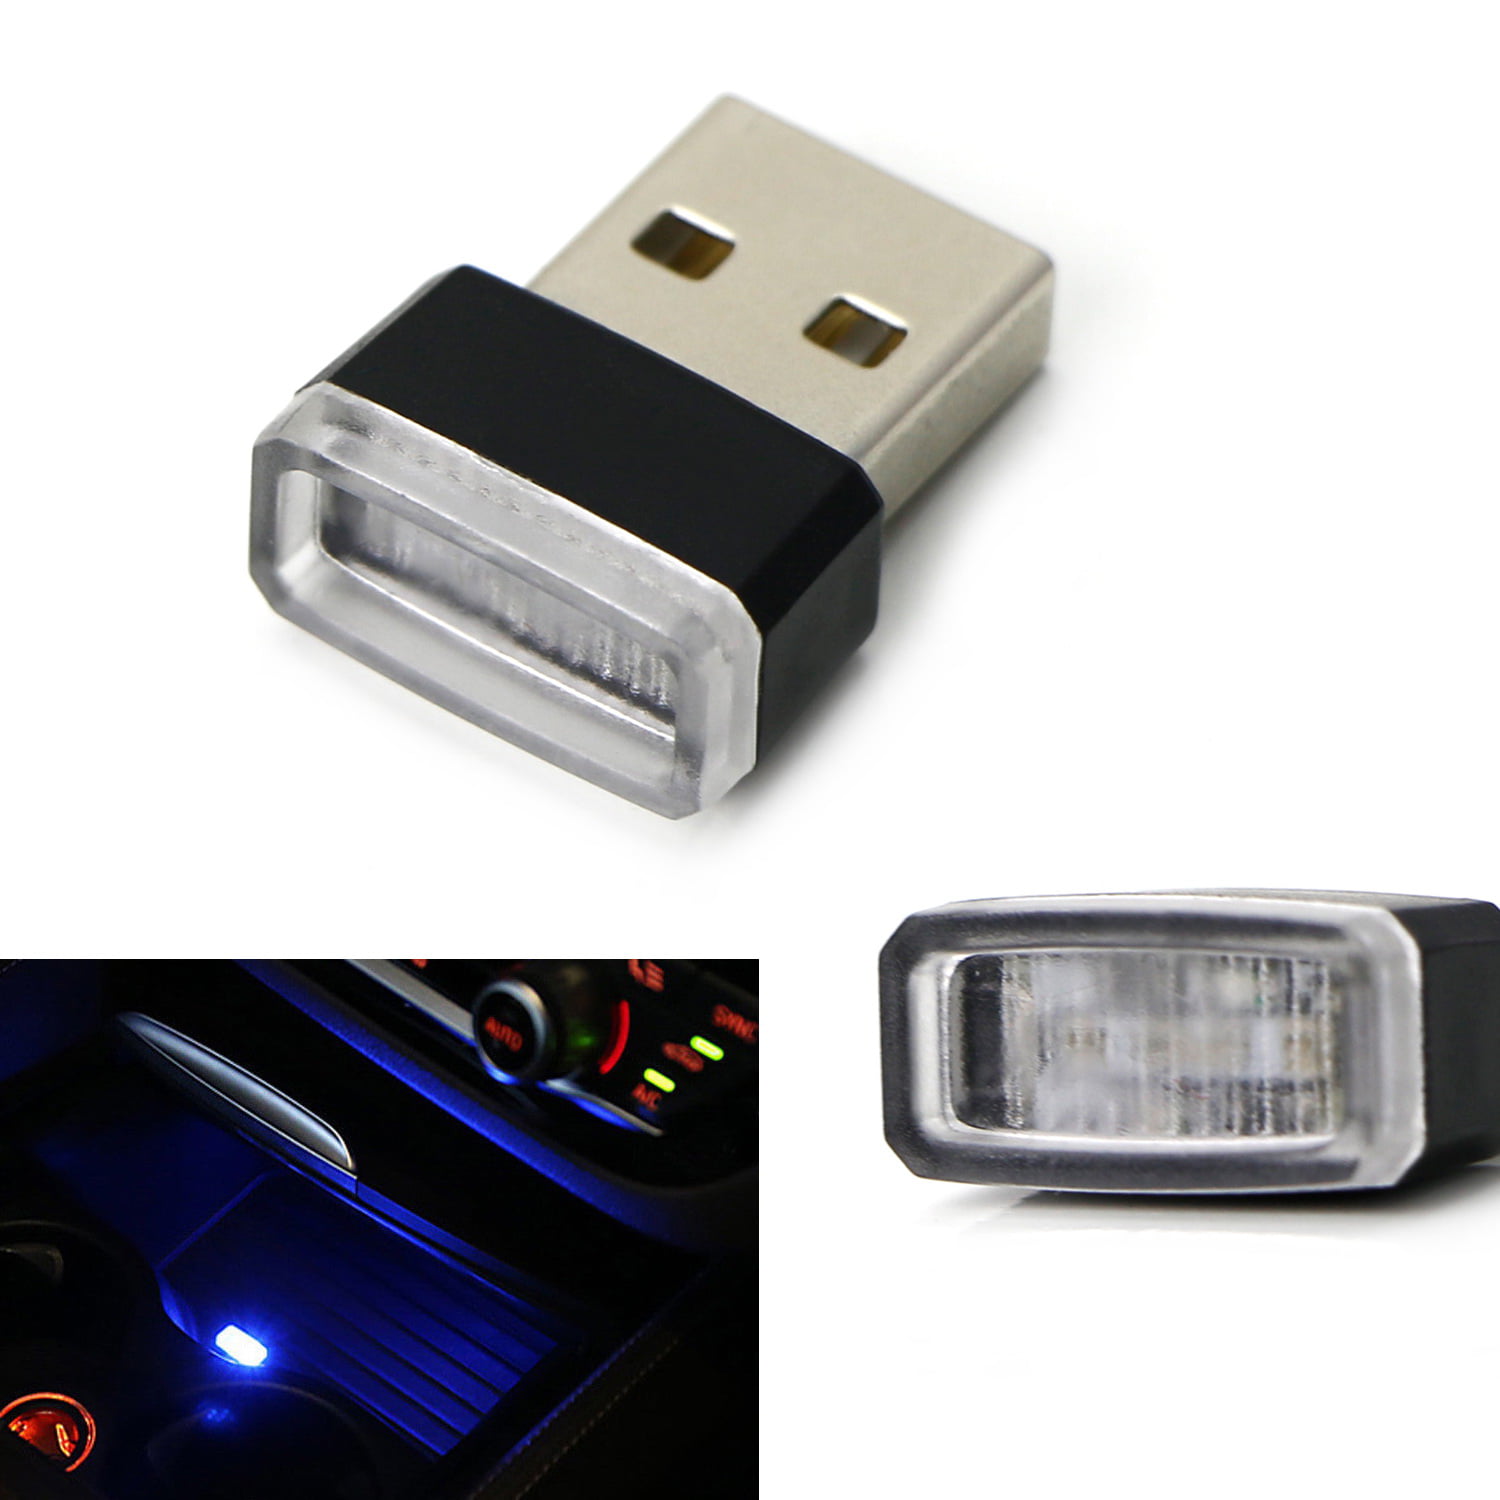 Details about   Mini Flexible USB LED Lamp Car Atmosphere Light Accessory Colorful 1PCS Quality 